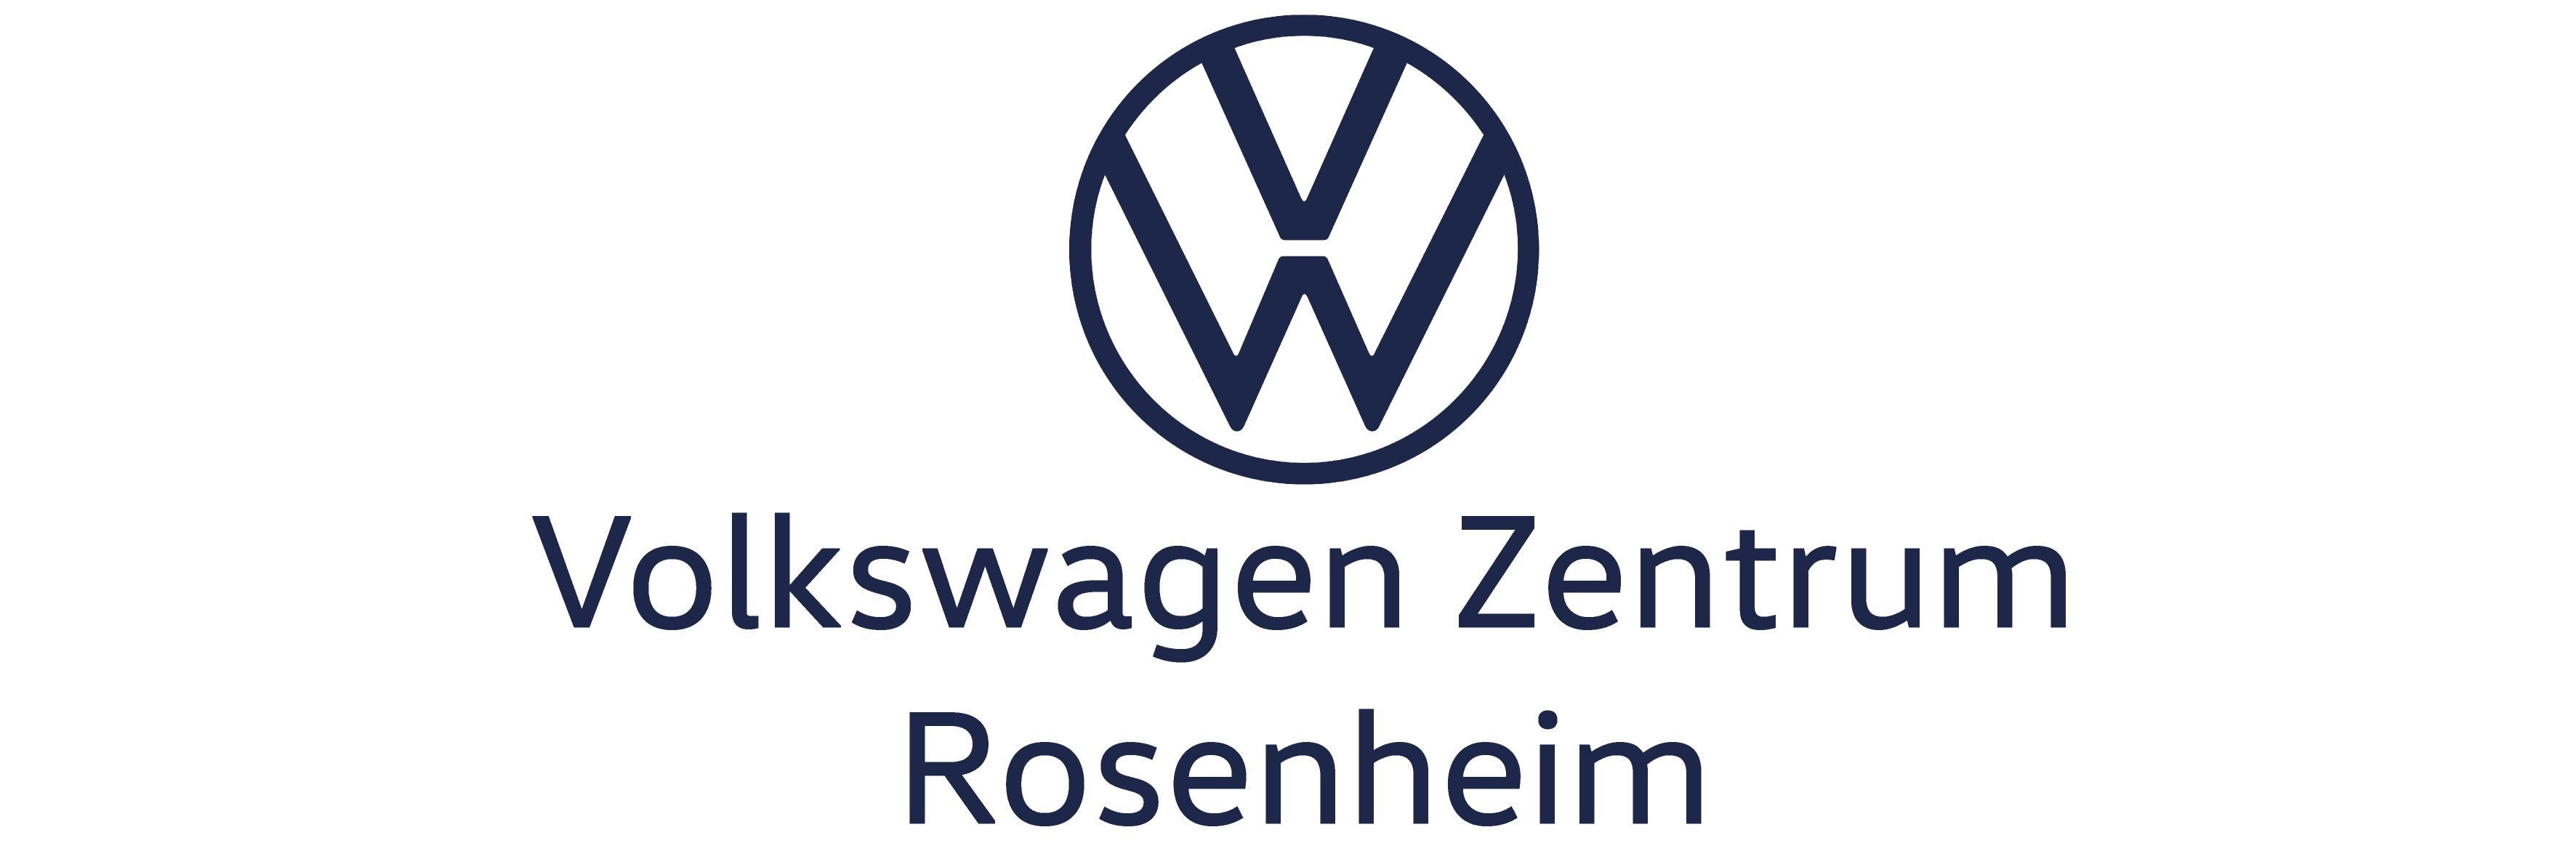 VW Zentrum Rosenheim